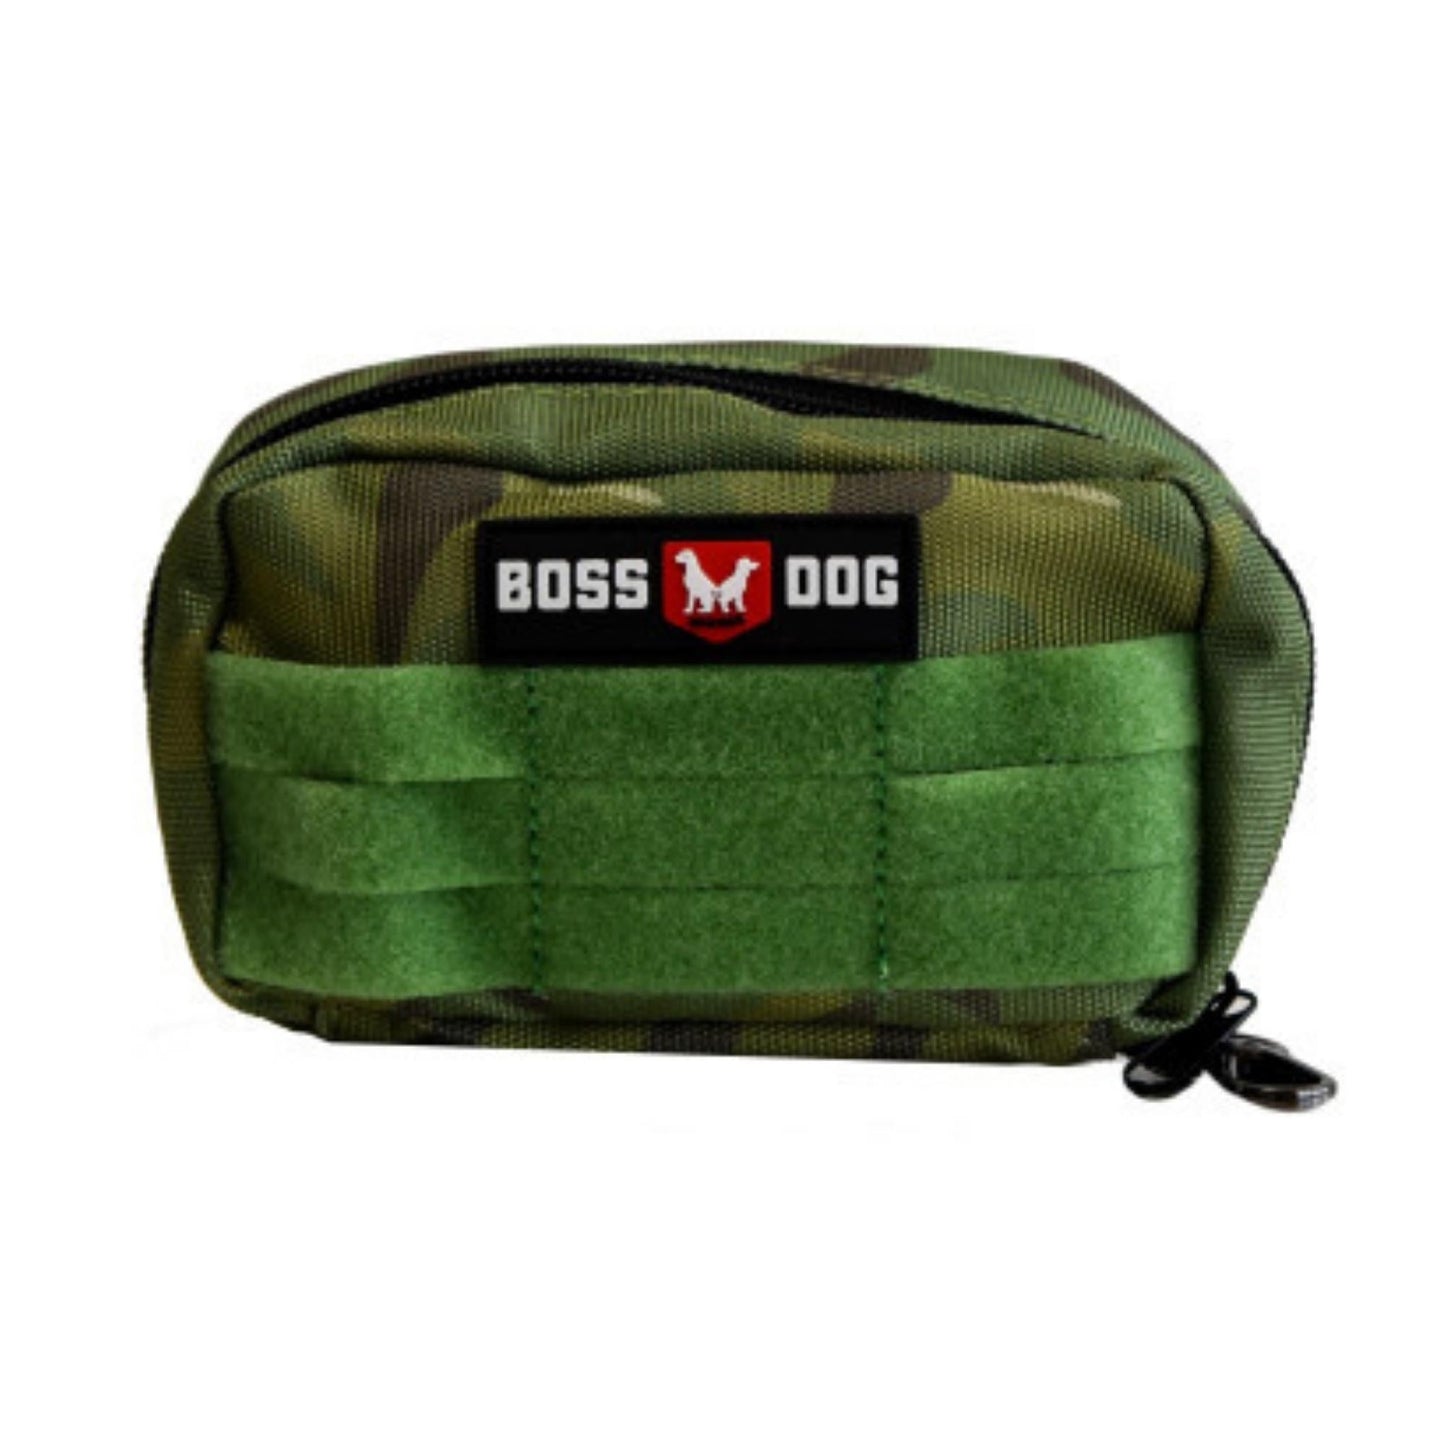 Boss Dog Tactical Molle Harness Bag Green Camo, 1ea/Small